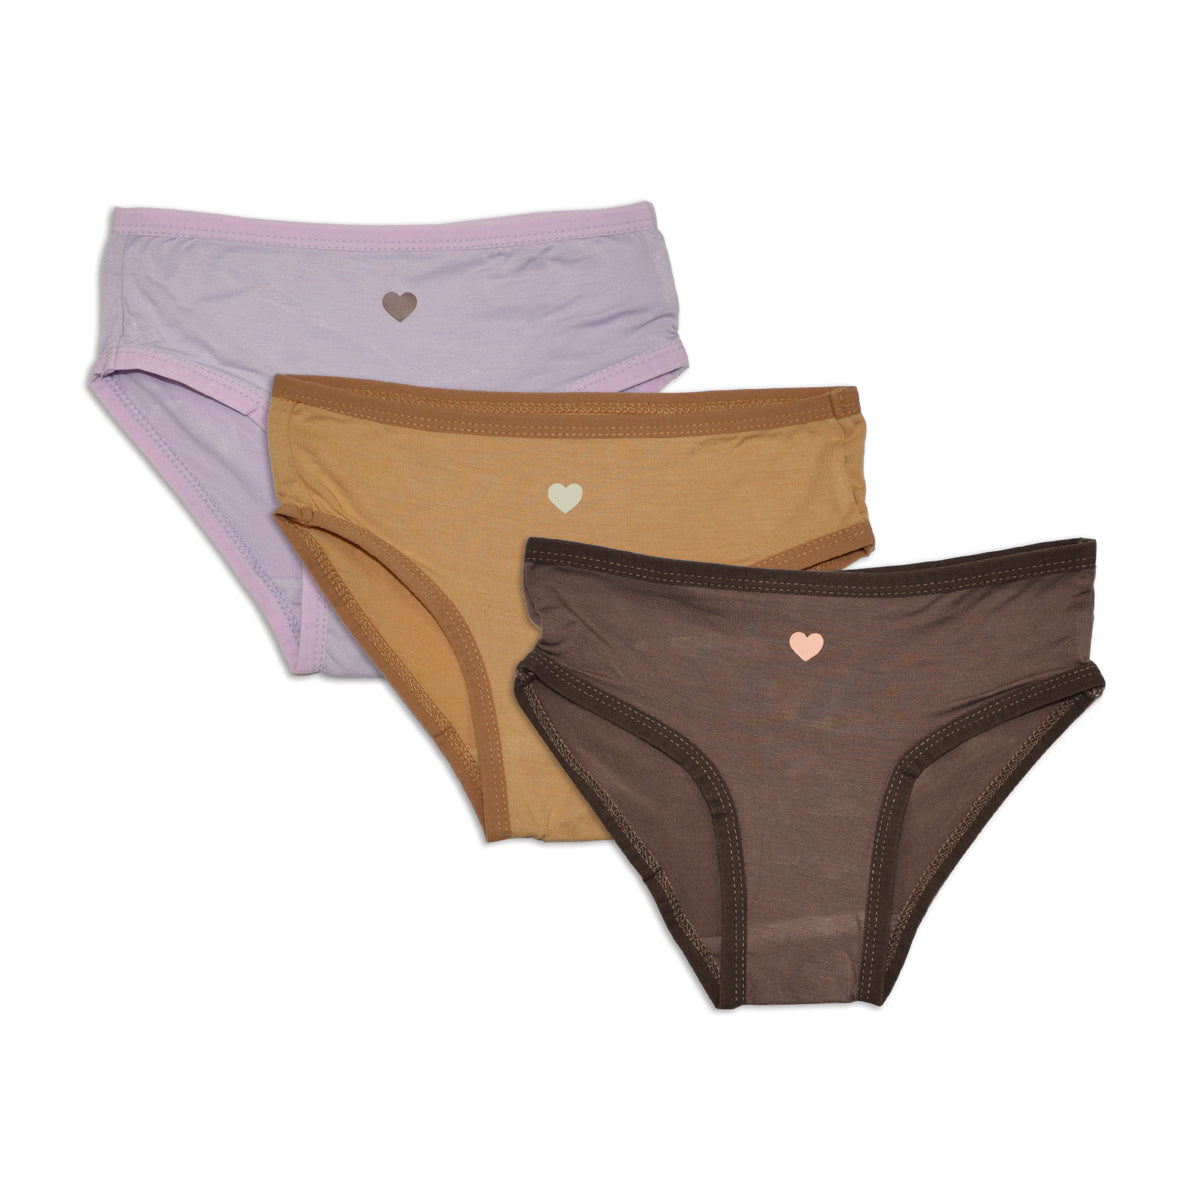 Bamboo Girls Bikini Underwear 3 pack (Pink Lemonade/Lustre/Soft Sand)